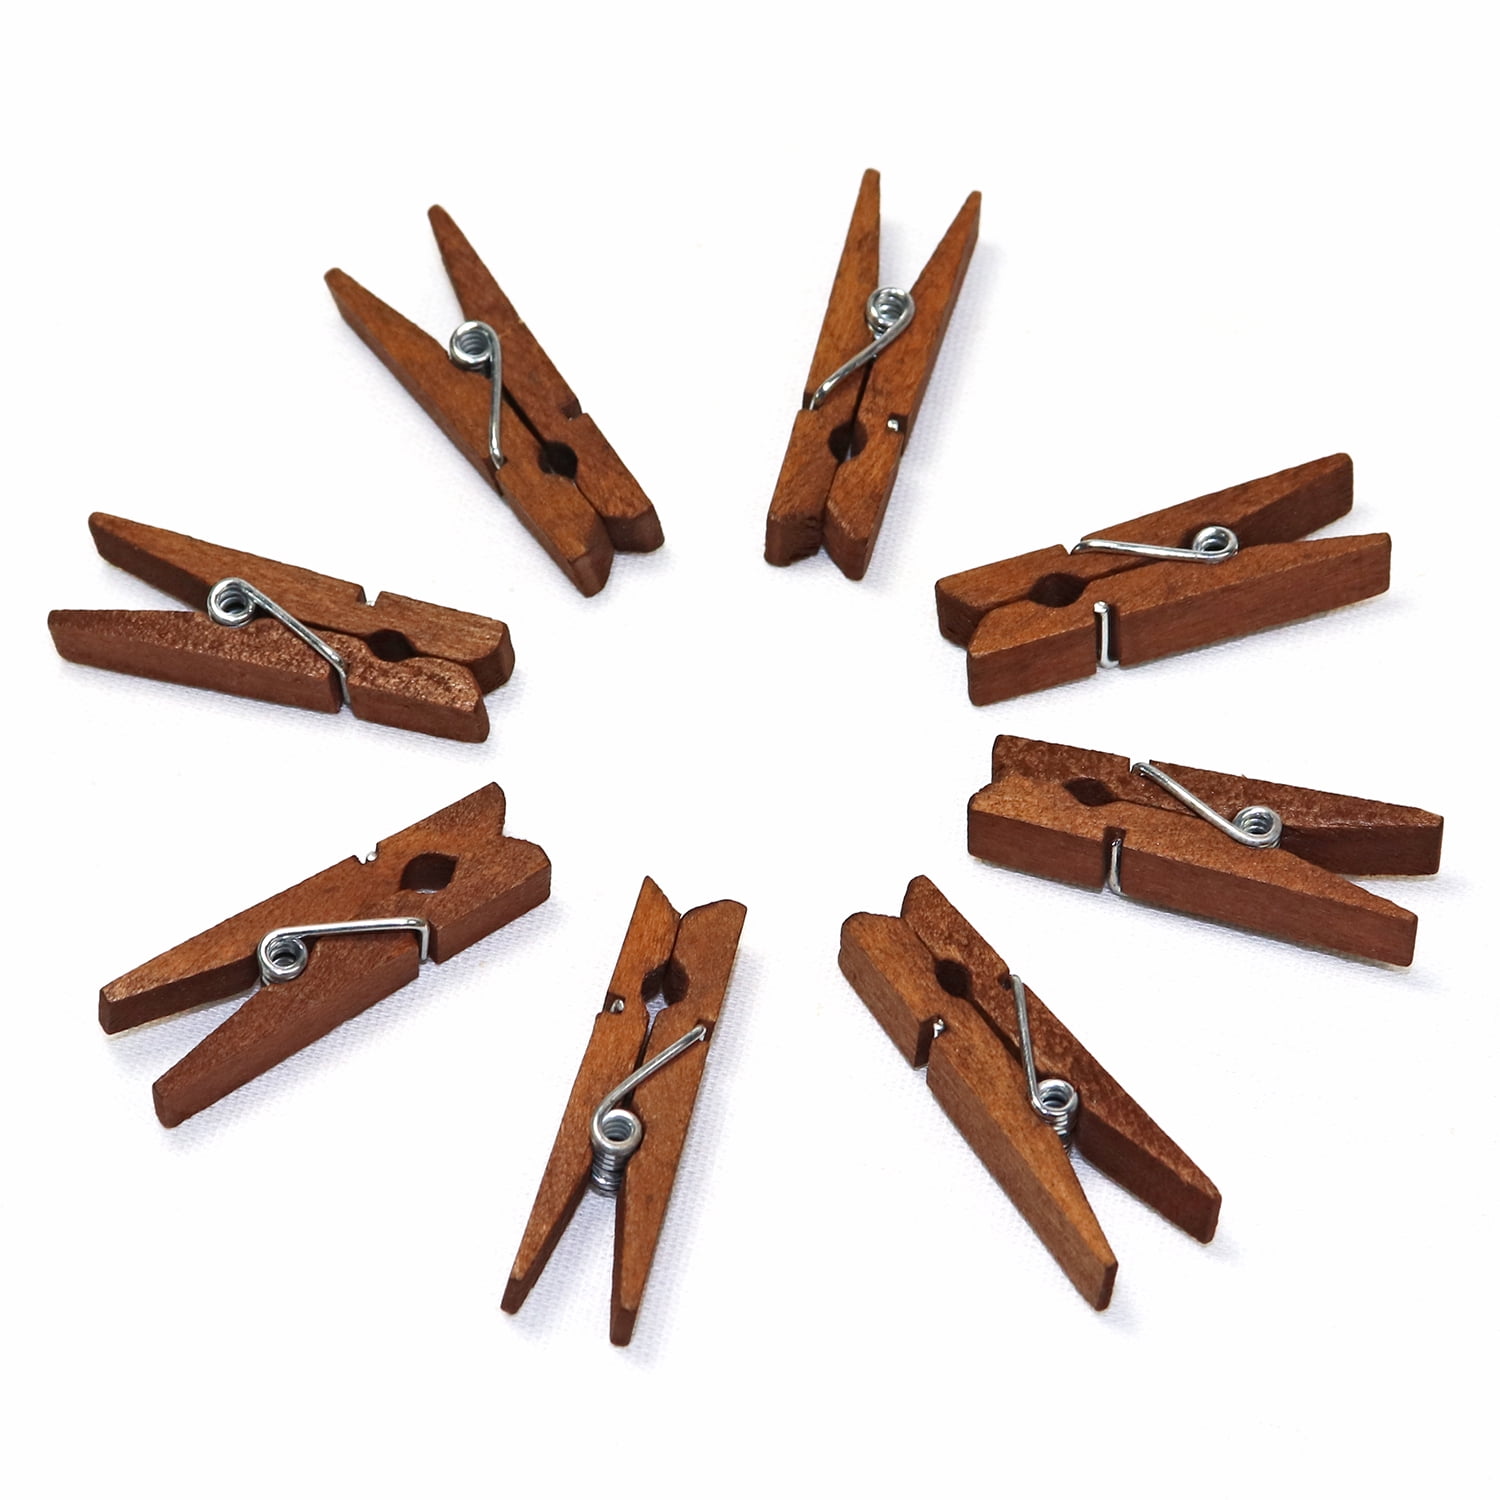 Mini Natural Wooden Clothespins, 320pcs, 1 Inch Photo Paper Peg Pin Craft  Clips for Scrapbooking, Arts & Crafts, Hanging Photos (Natural)